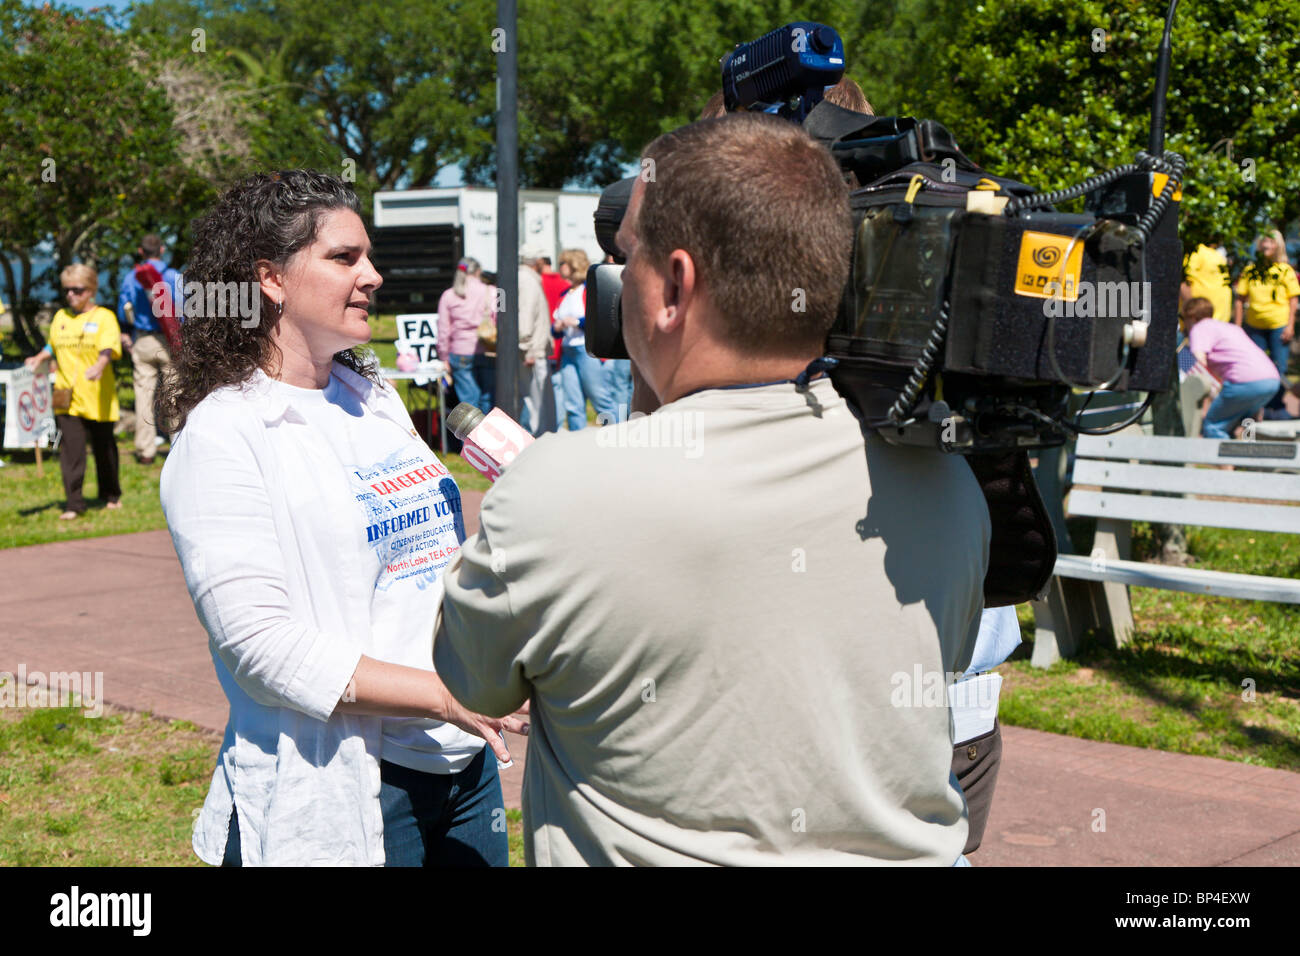 Local Tea Party organizer gives a television interview at a Tea Party political event at Farran Park in Eustis, Florida Stock Photo